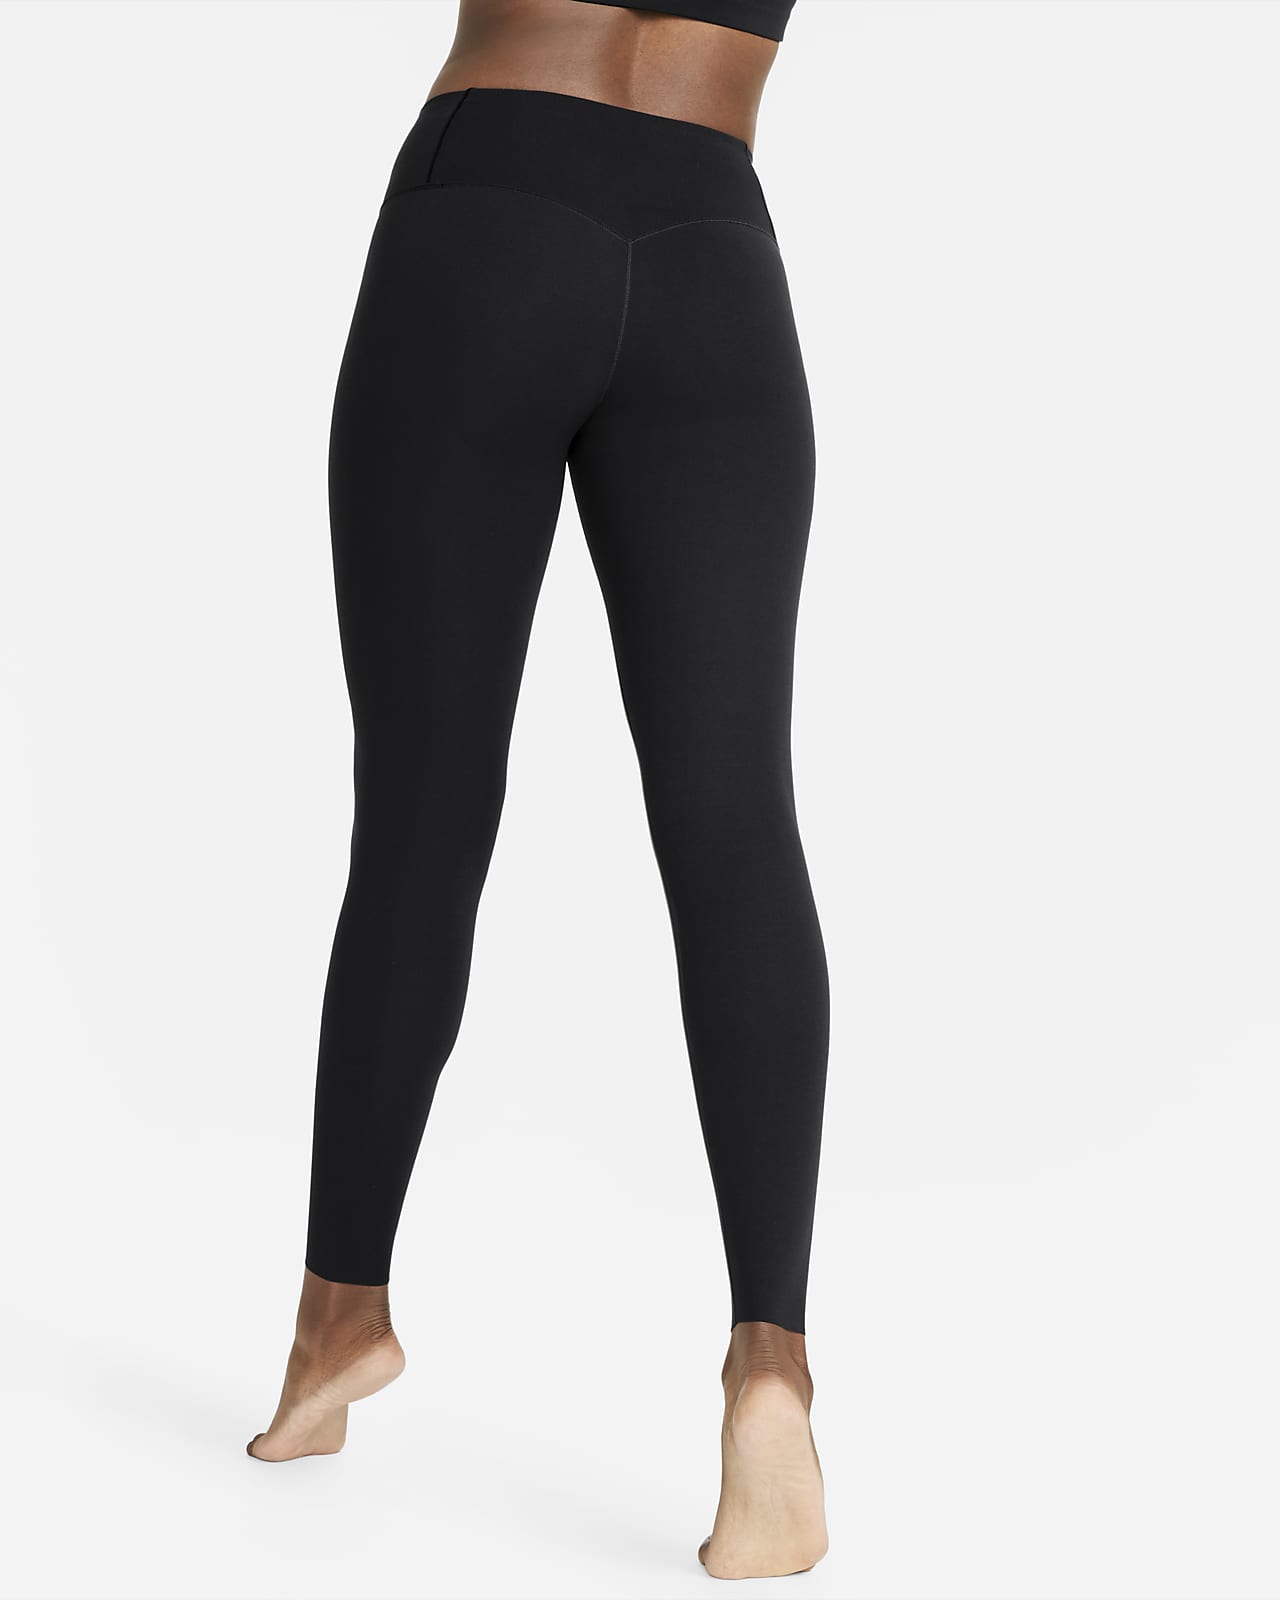 Black Leggings for Women - High Waisted Workout Leggings - Pantalones de  Mujer Cintura Alta at  Women's Clothing store